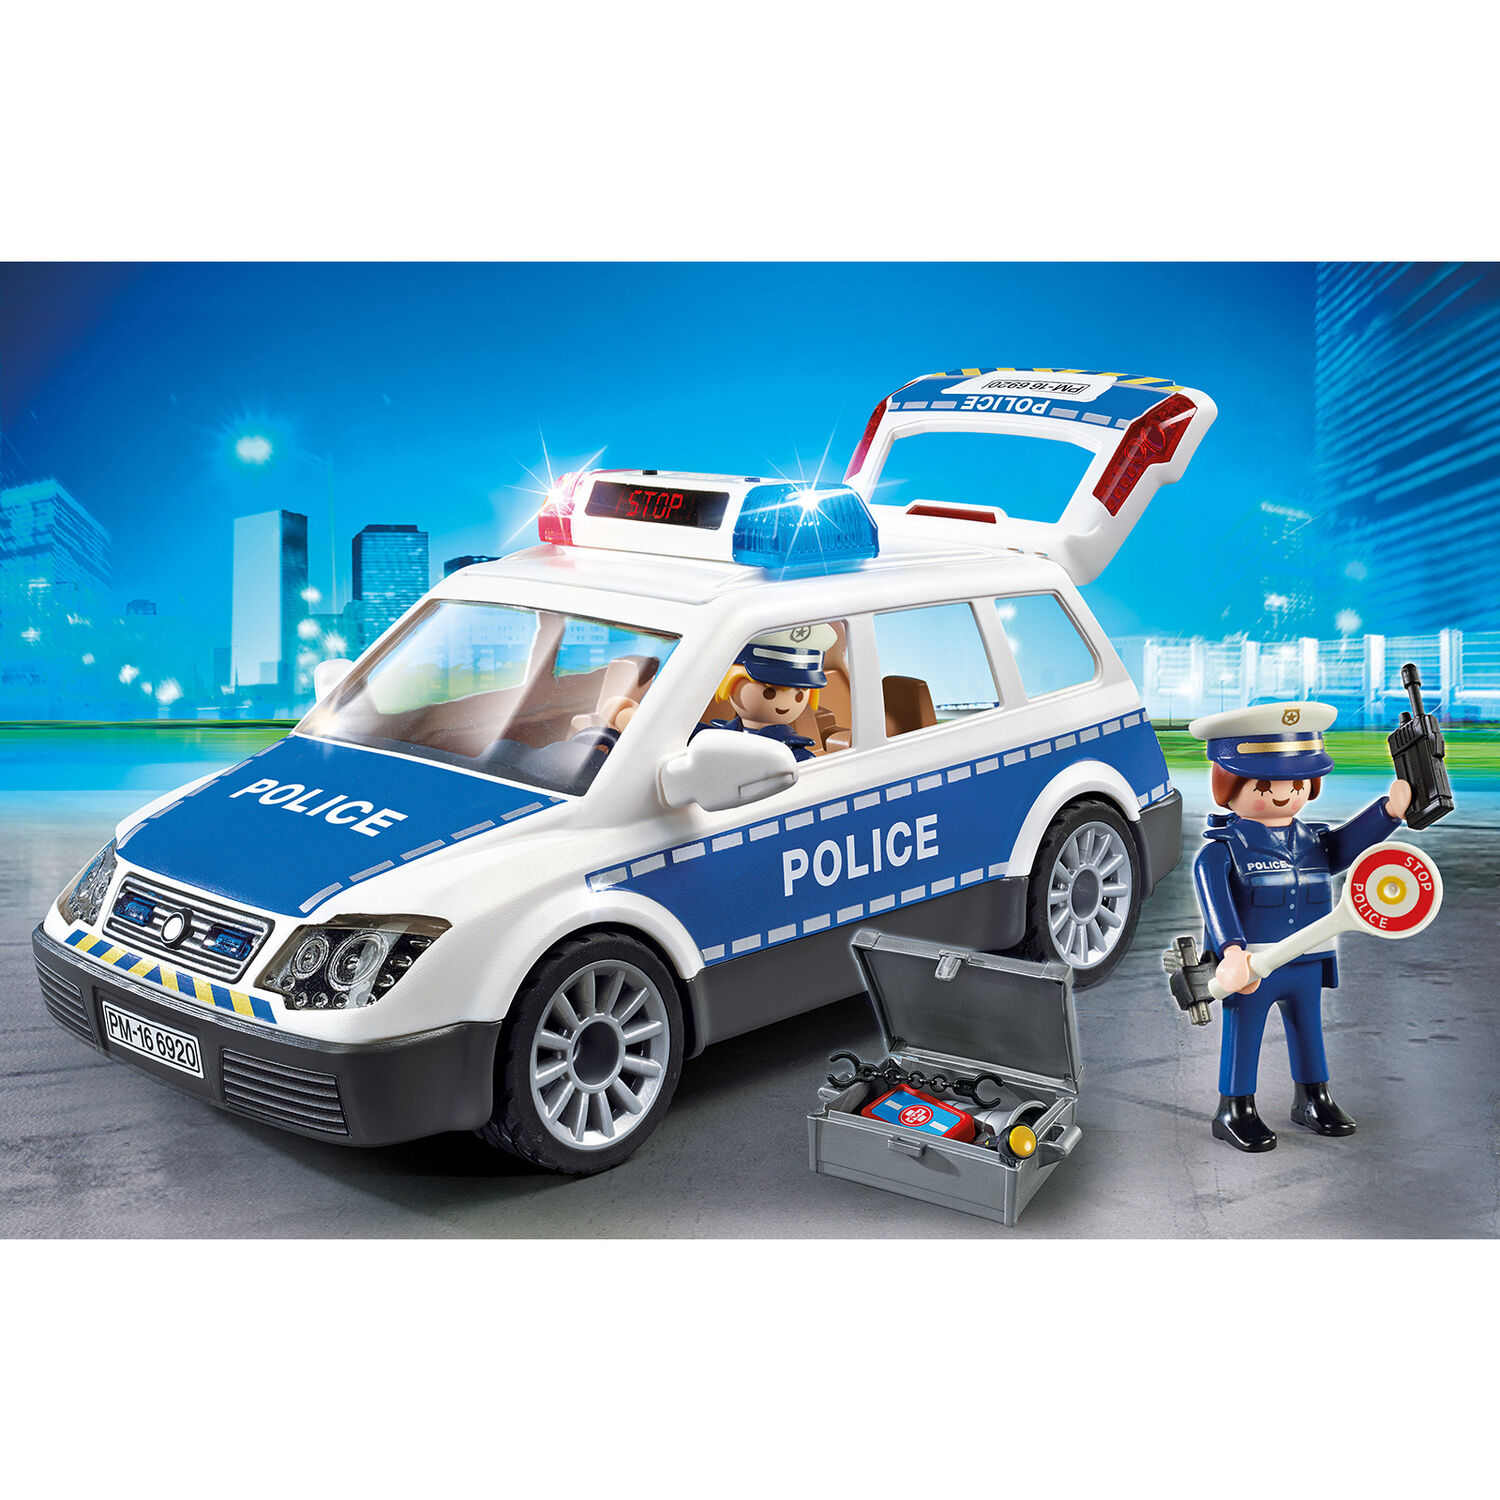 ledig stilling Kollega mave Playmobil - City Action - Squad Car with Lights and Sound - 6920 only £29.99